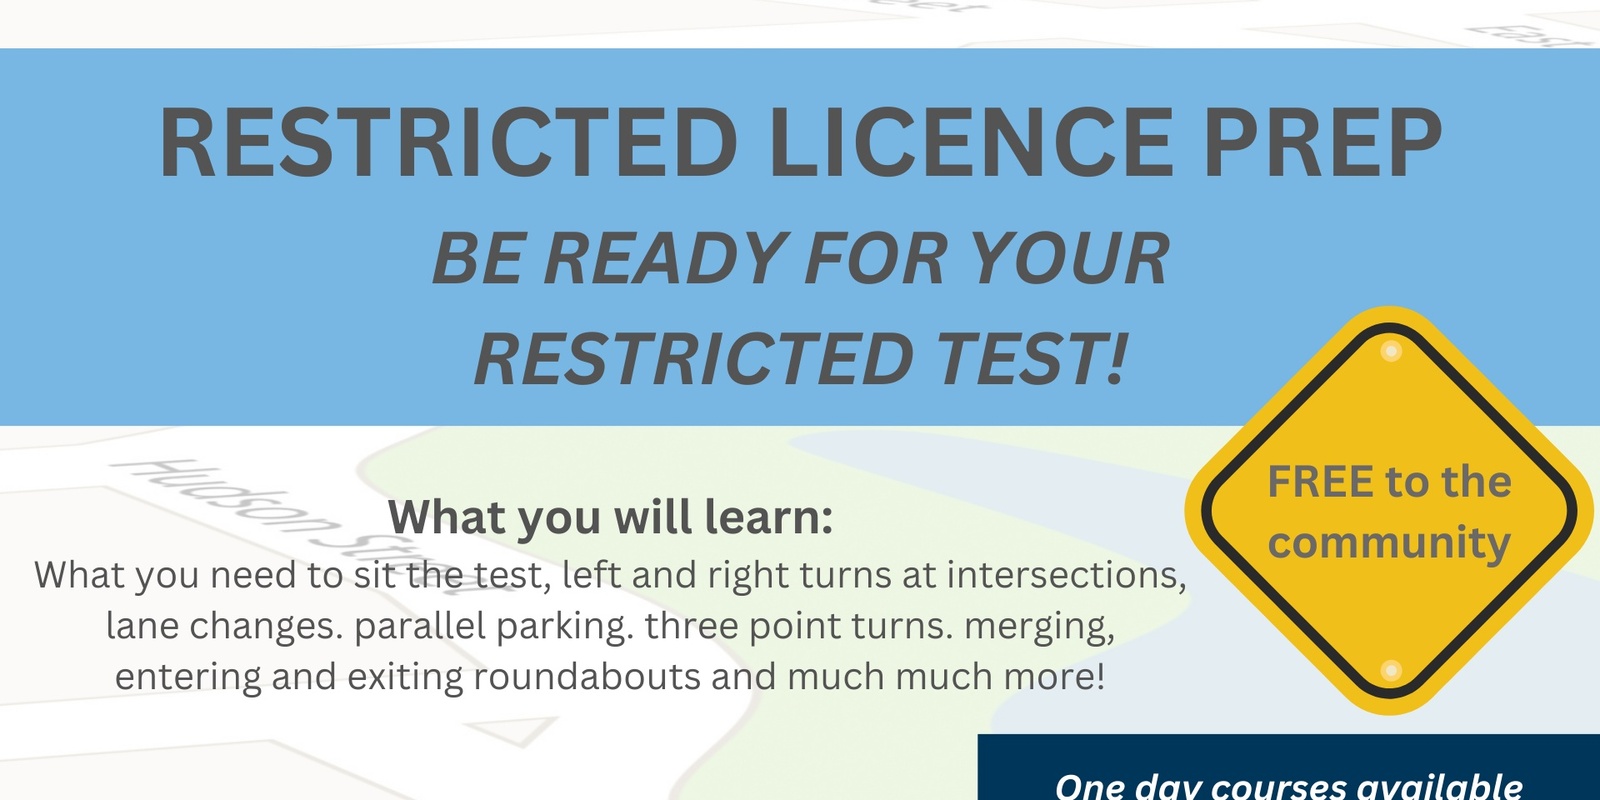 Banner image for Restricted Licence Prep